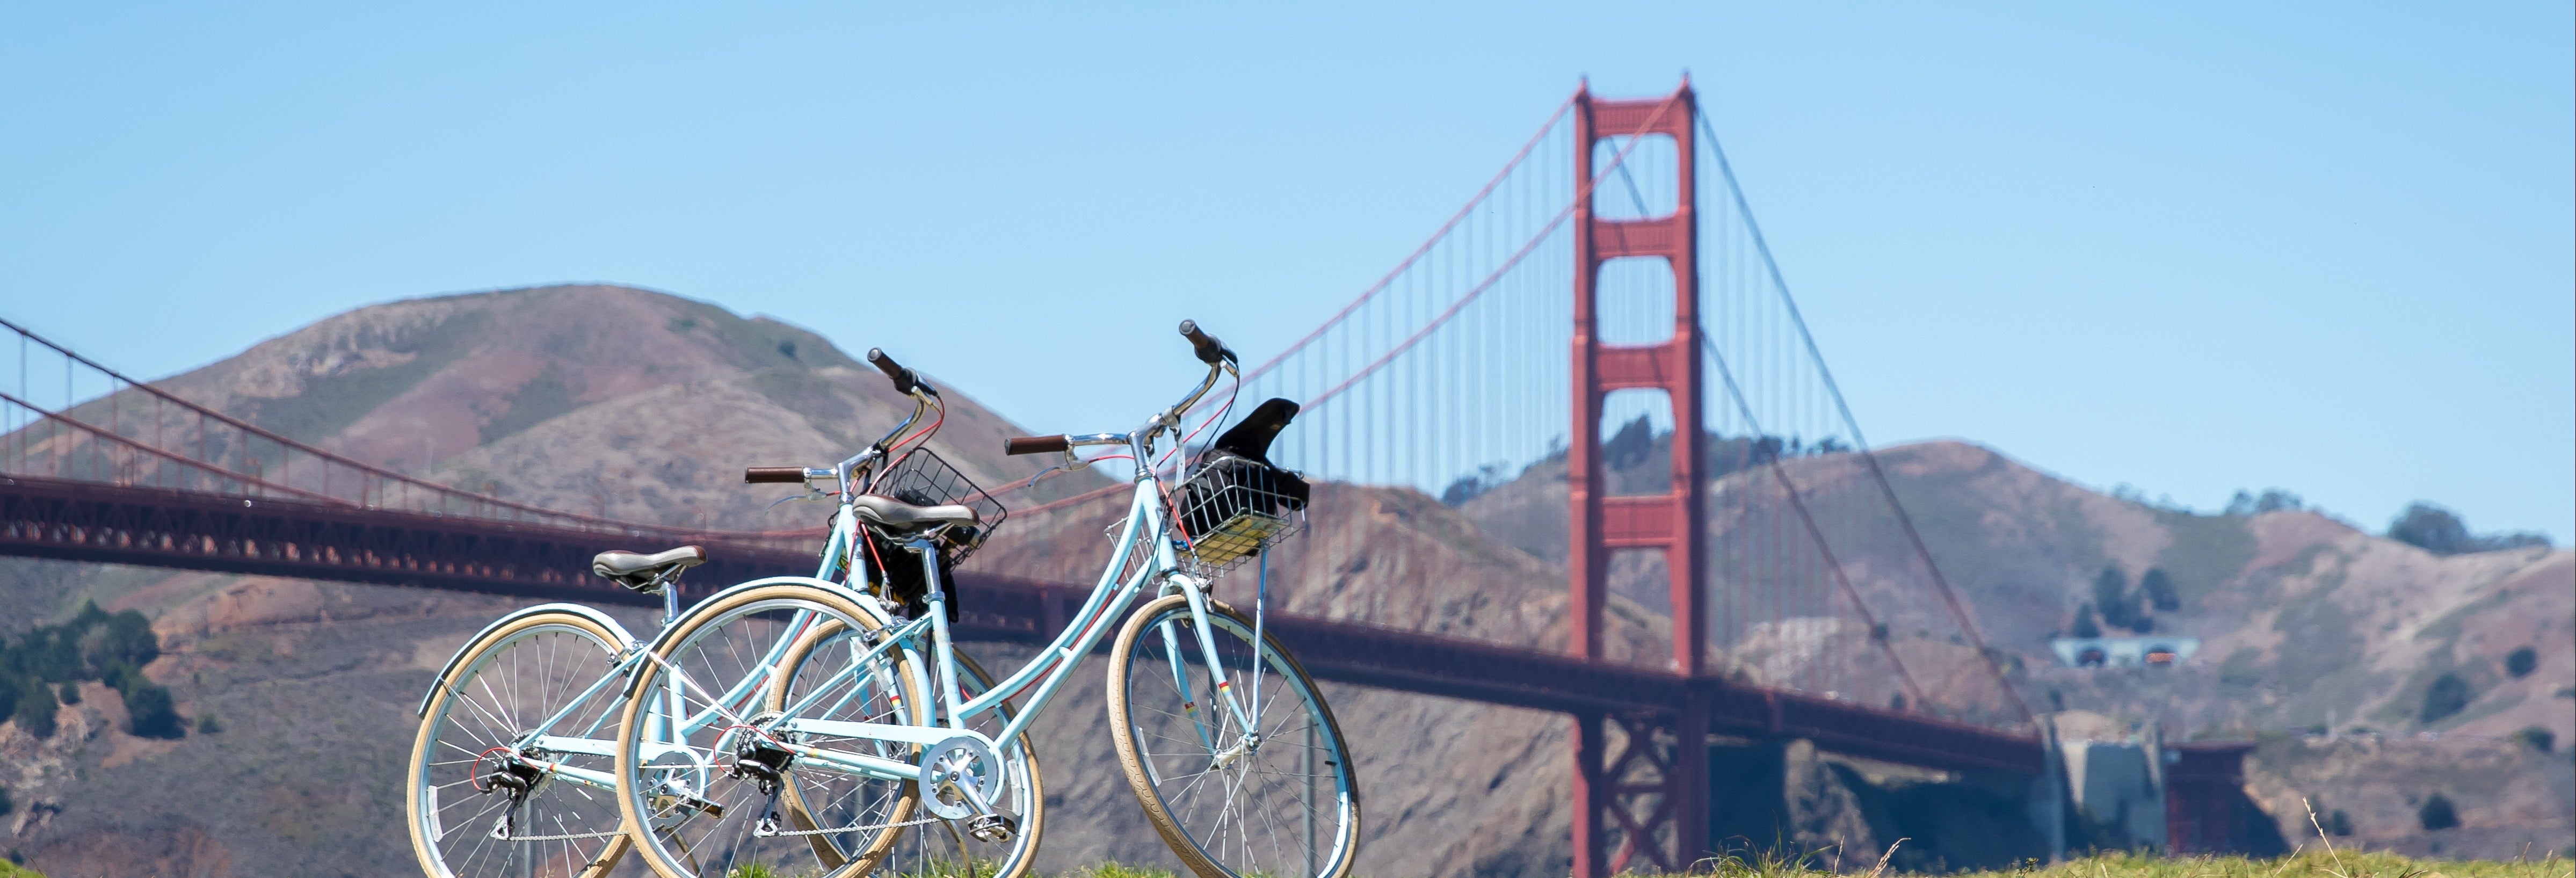 Bicycle Rental in San Francisco